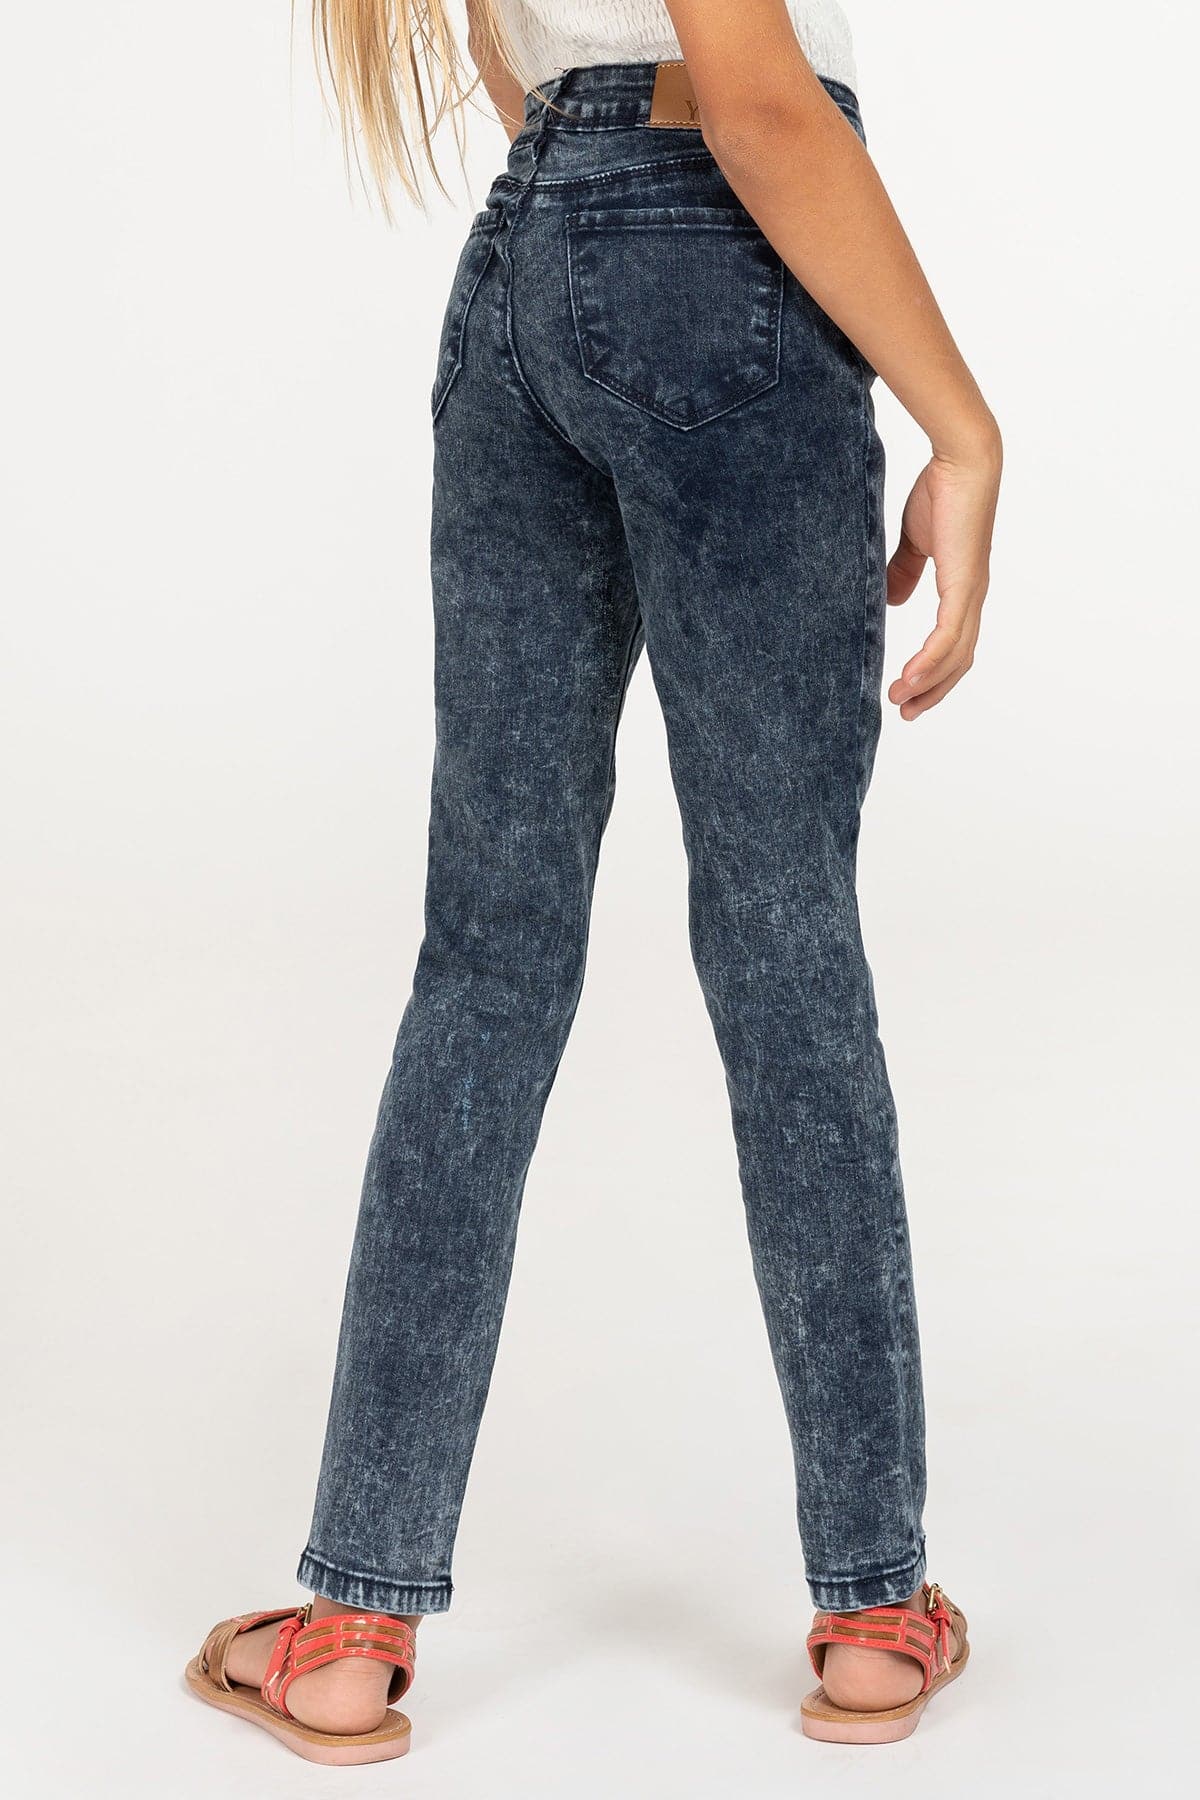 Girls Essential Denim Skinny Jeans